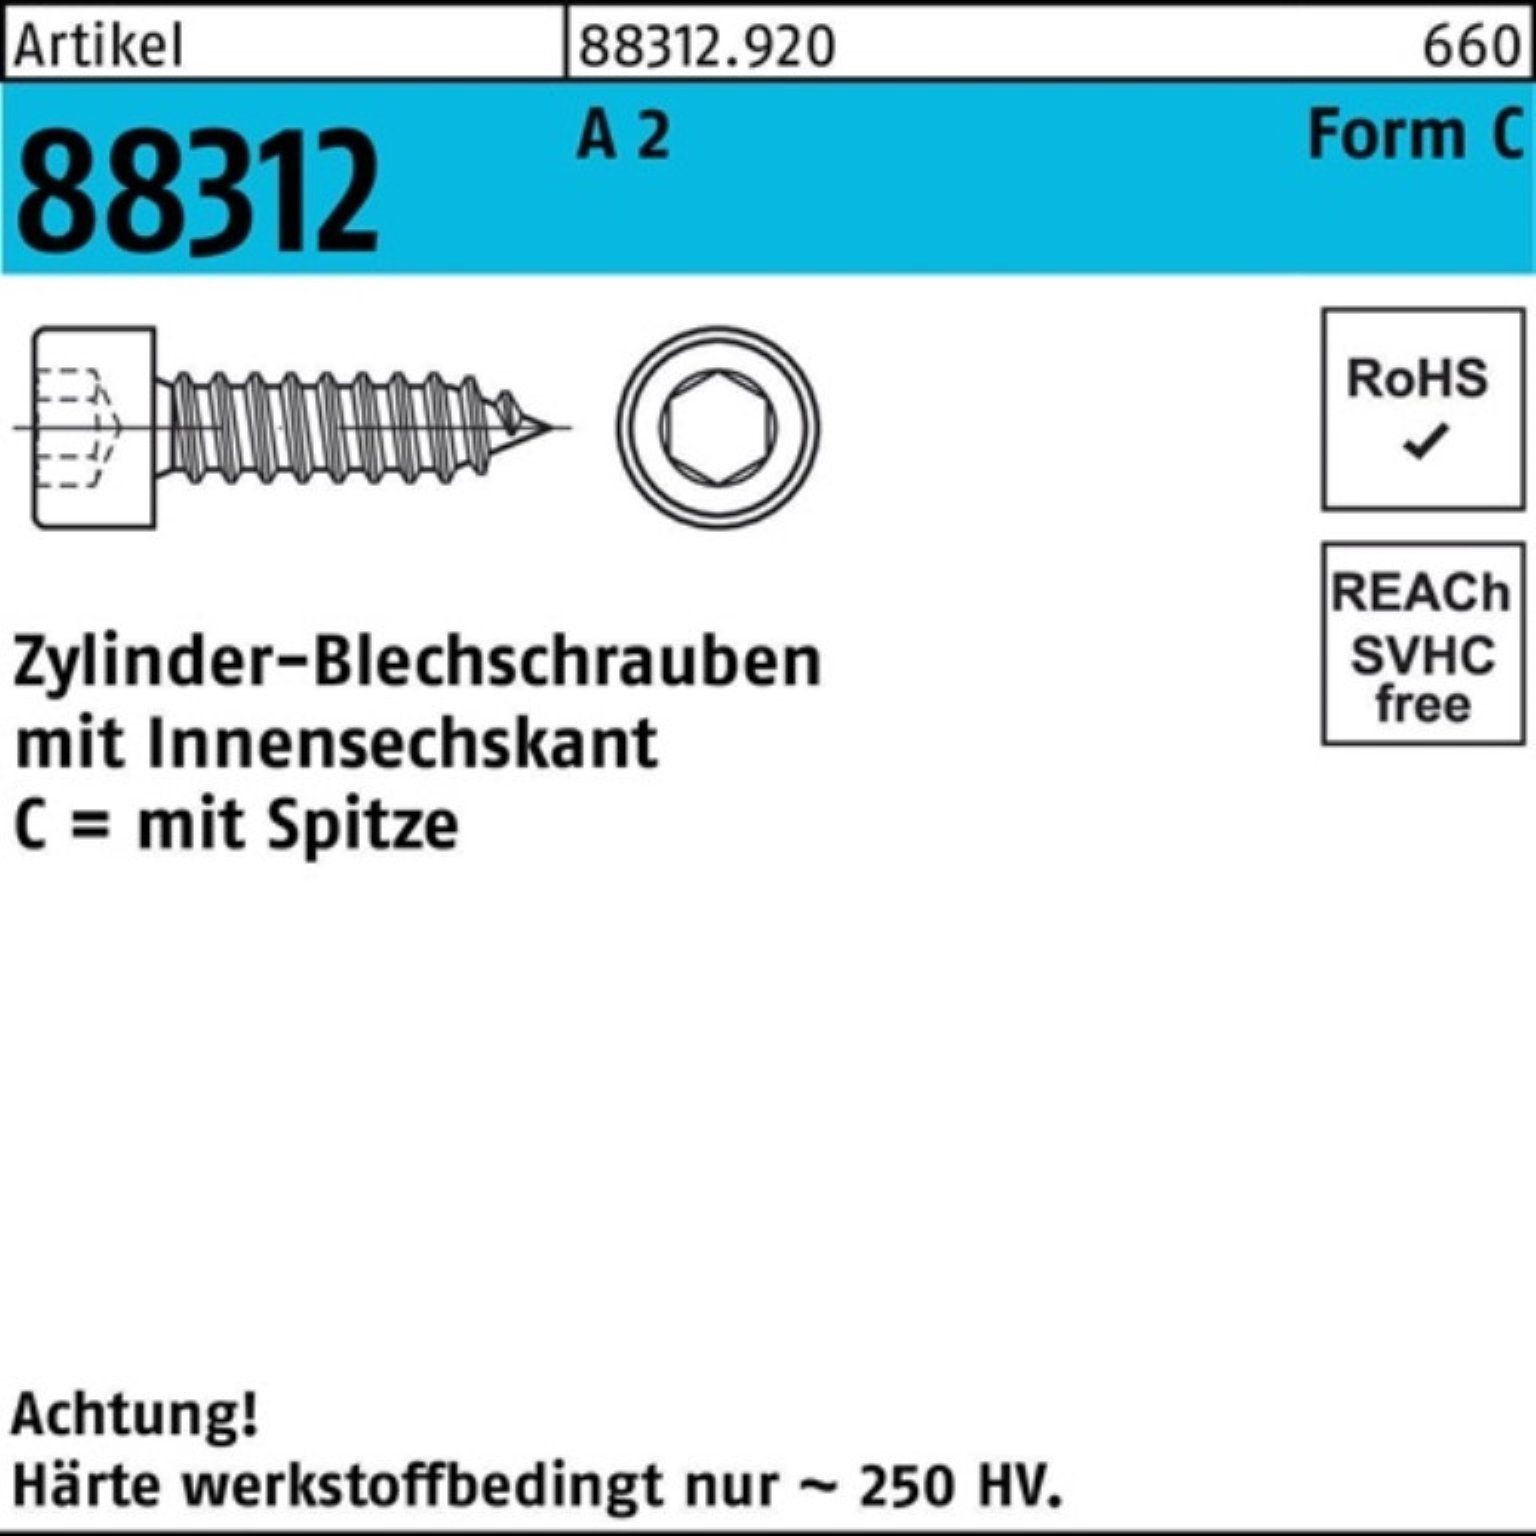 Pack Blechschraube Reyher Spitze/Innen-6kt 200er A R C 6,3x 88312 19 Zylinderblechschraube